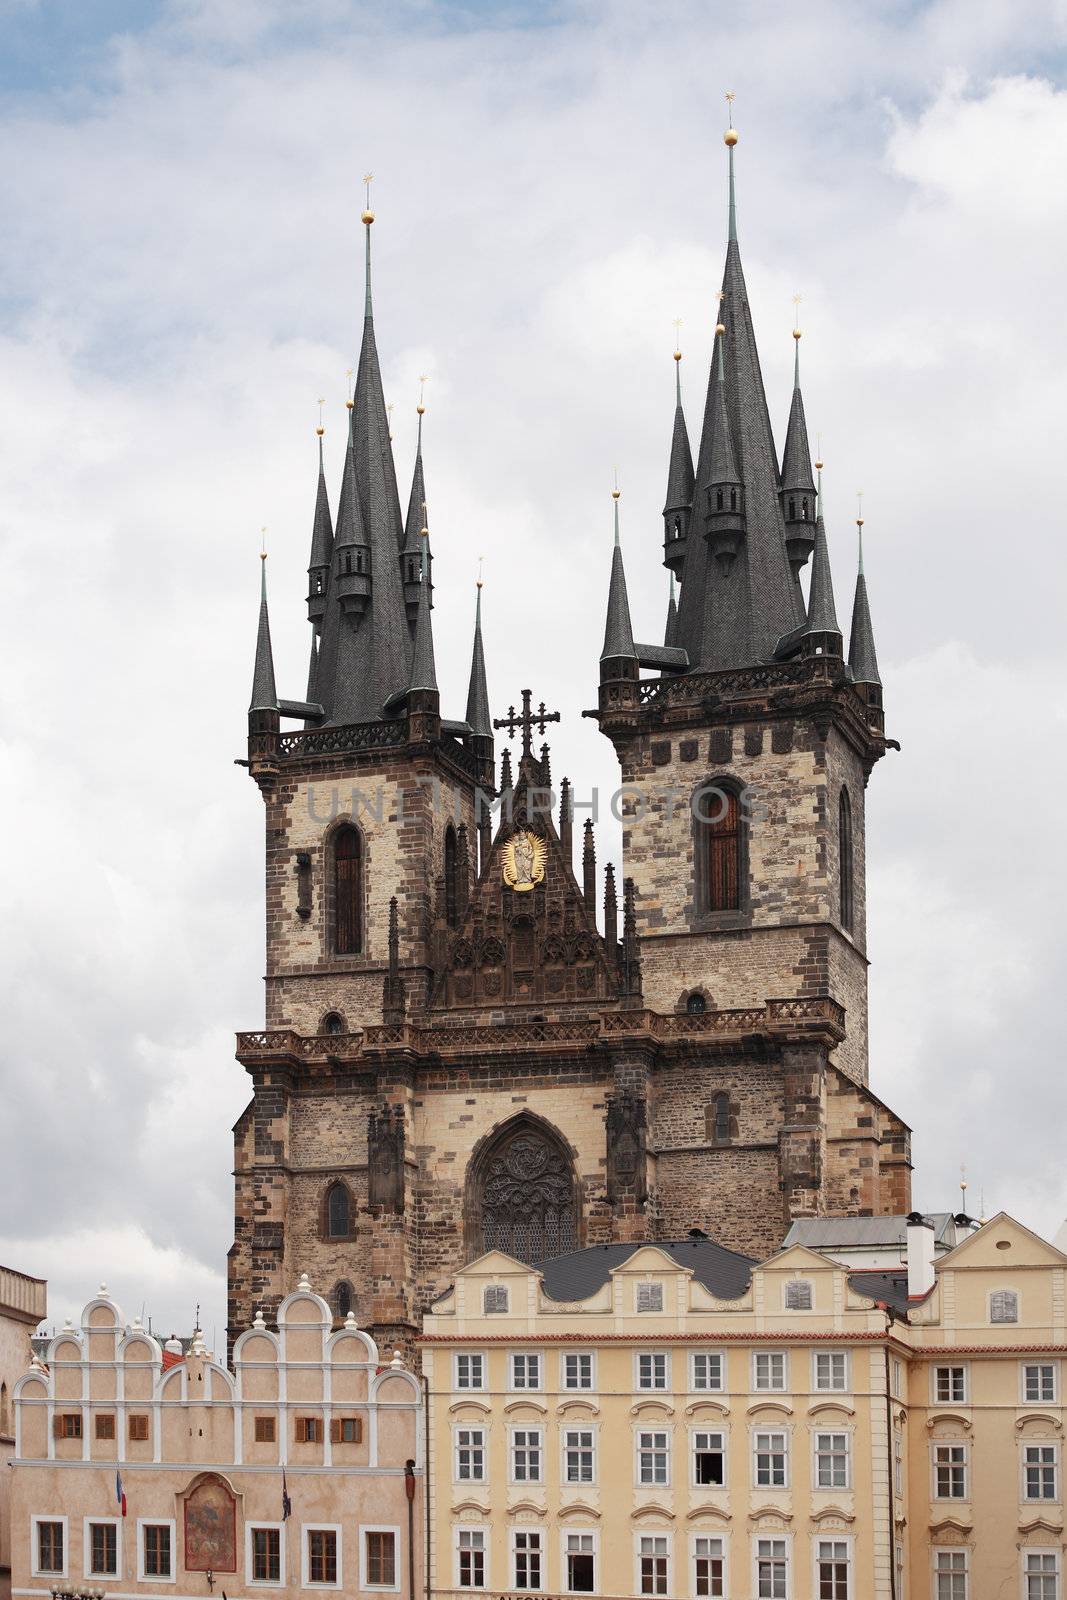 Church Of Our Lady Before Tyn under cloudy sky, Prague, Czech Republic